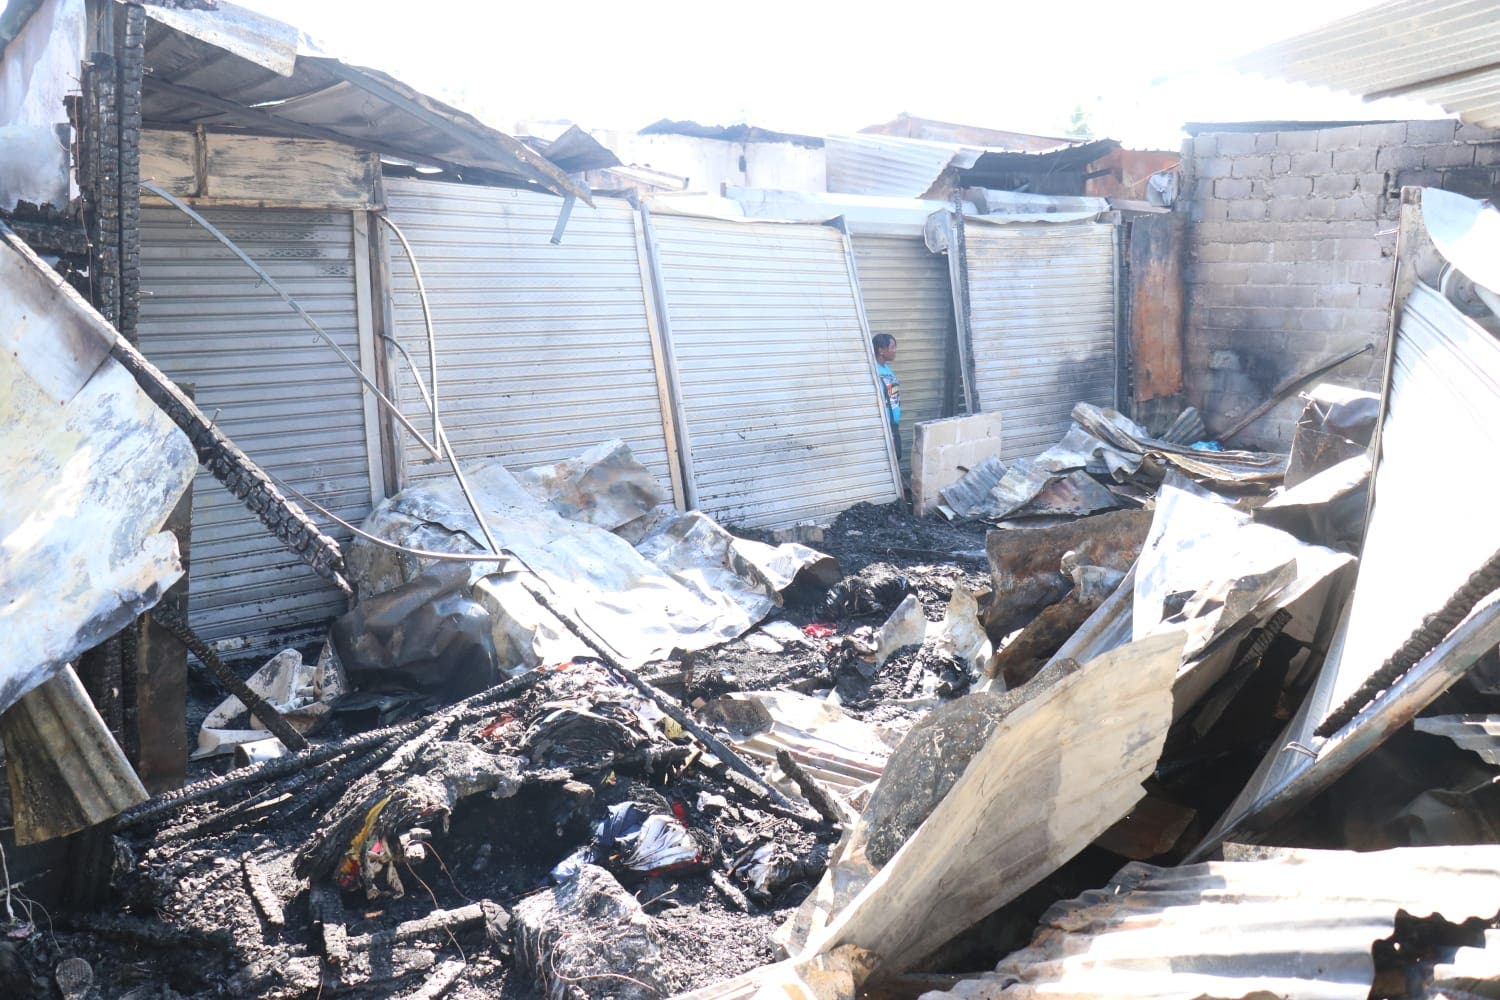 Comerciantes haitianos afectados por incendio esperan compensación del gobierno dominicano